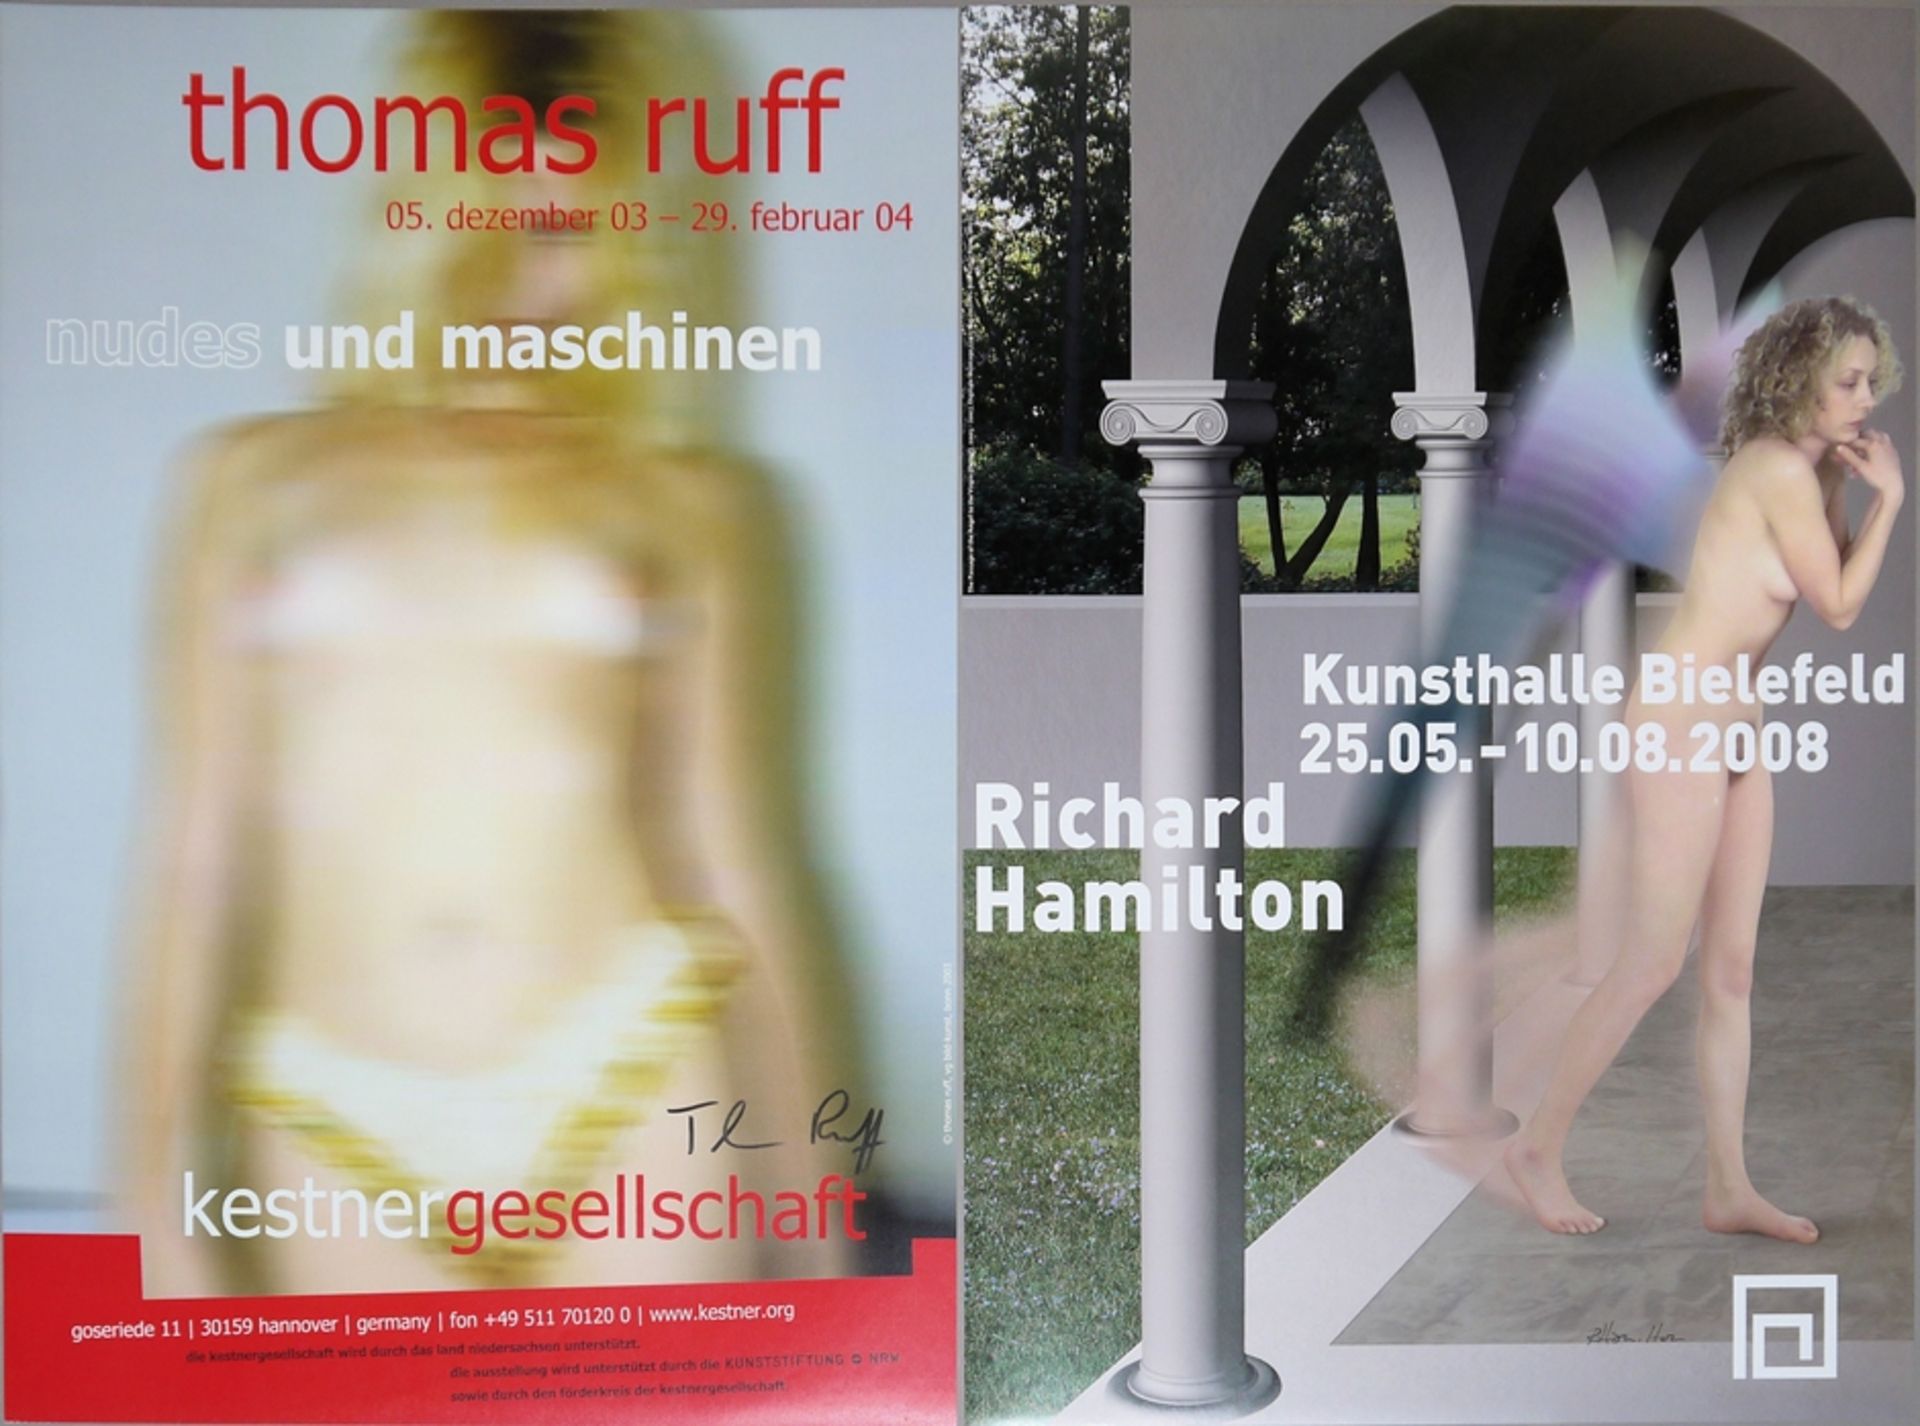 Richard Hamilton & Thomas Ruff, 2 handsignierte Ausstellungsplakate